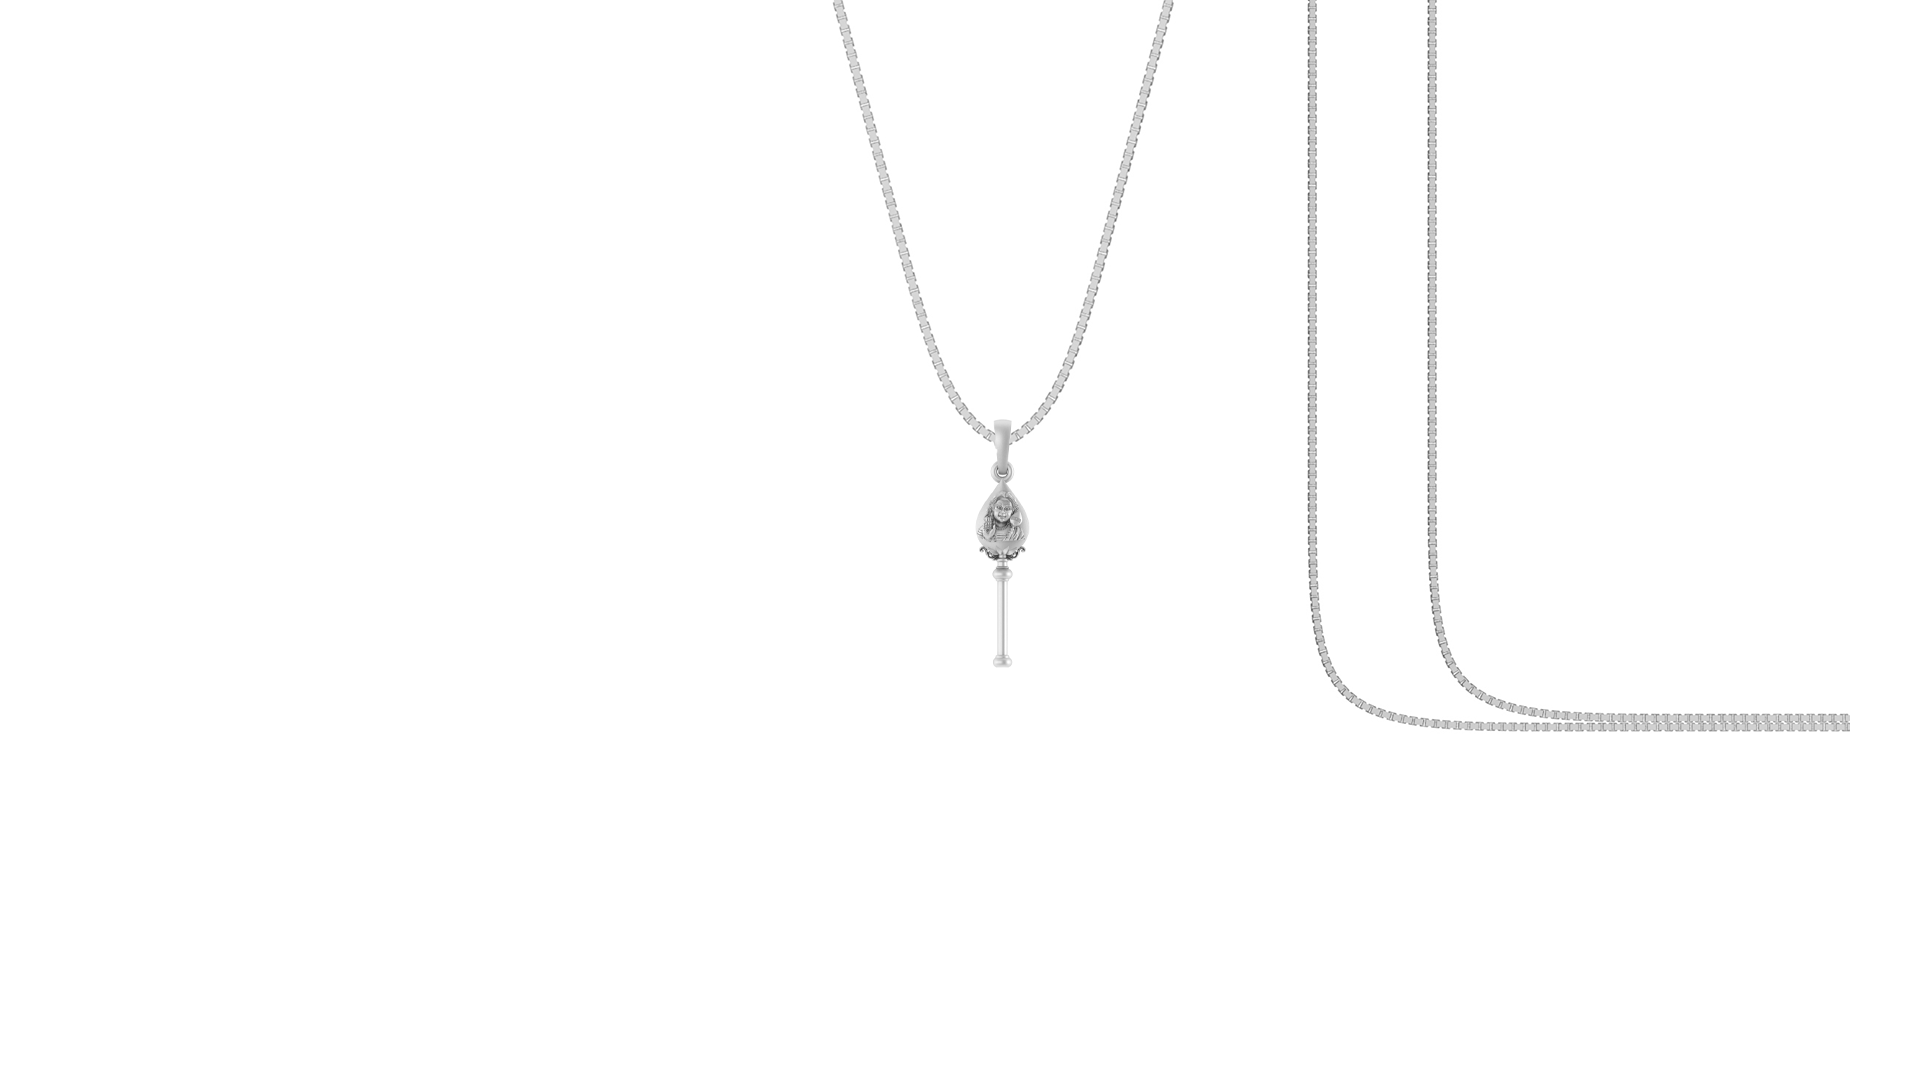 God Kartikeya Pure Silver 92.5% purity Chain pendant by Akshat Sapphire Murugan Pendant (Pendant with Box Chain-18 inches)